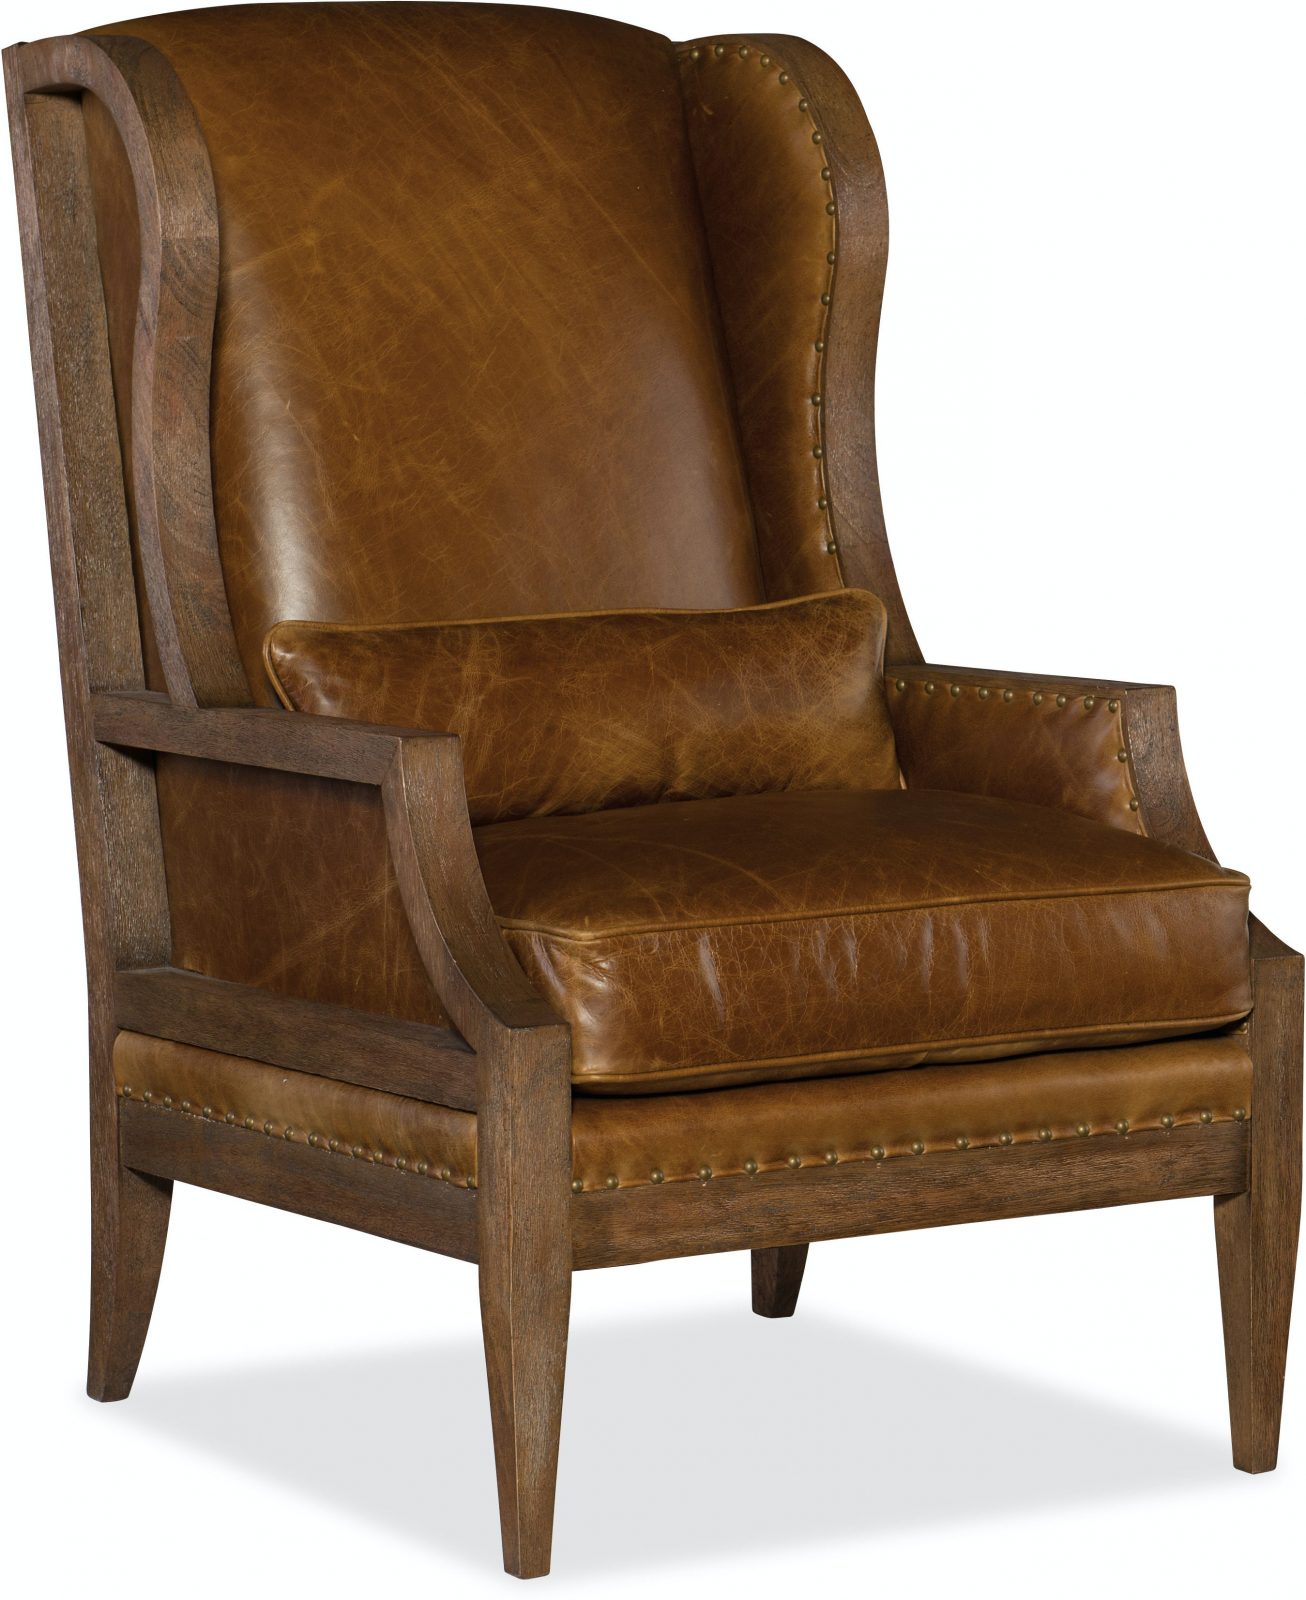 Laurel exposed wood wing chair